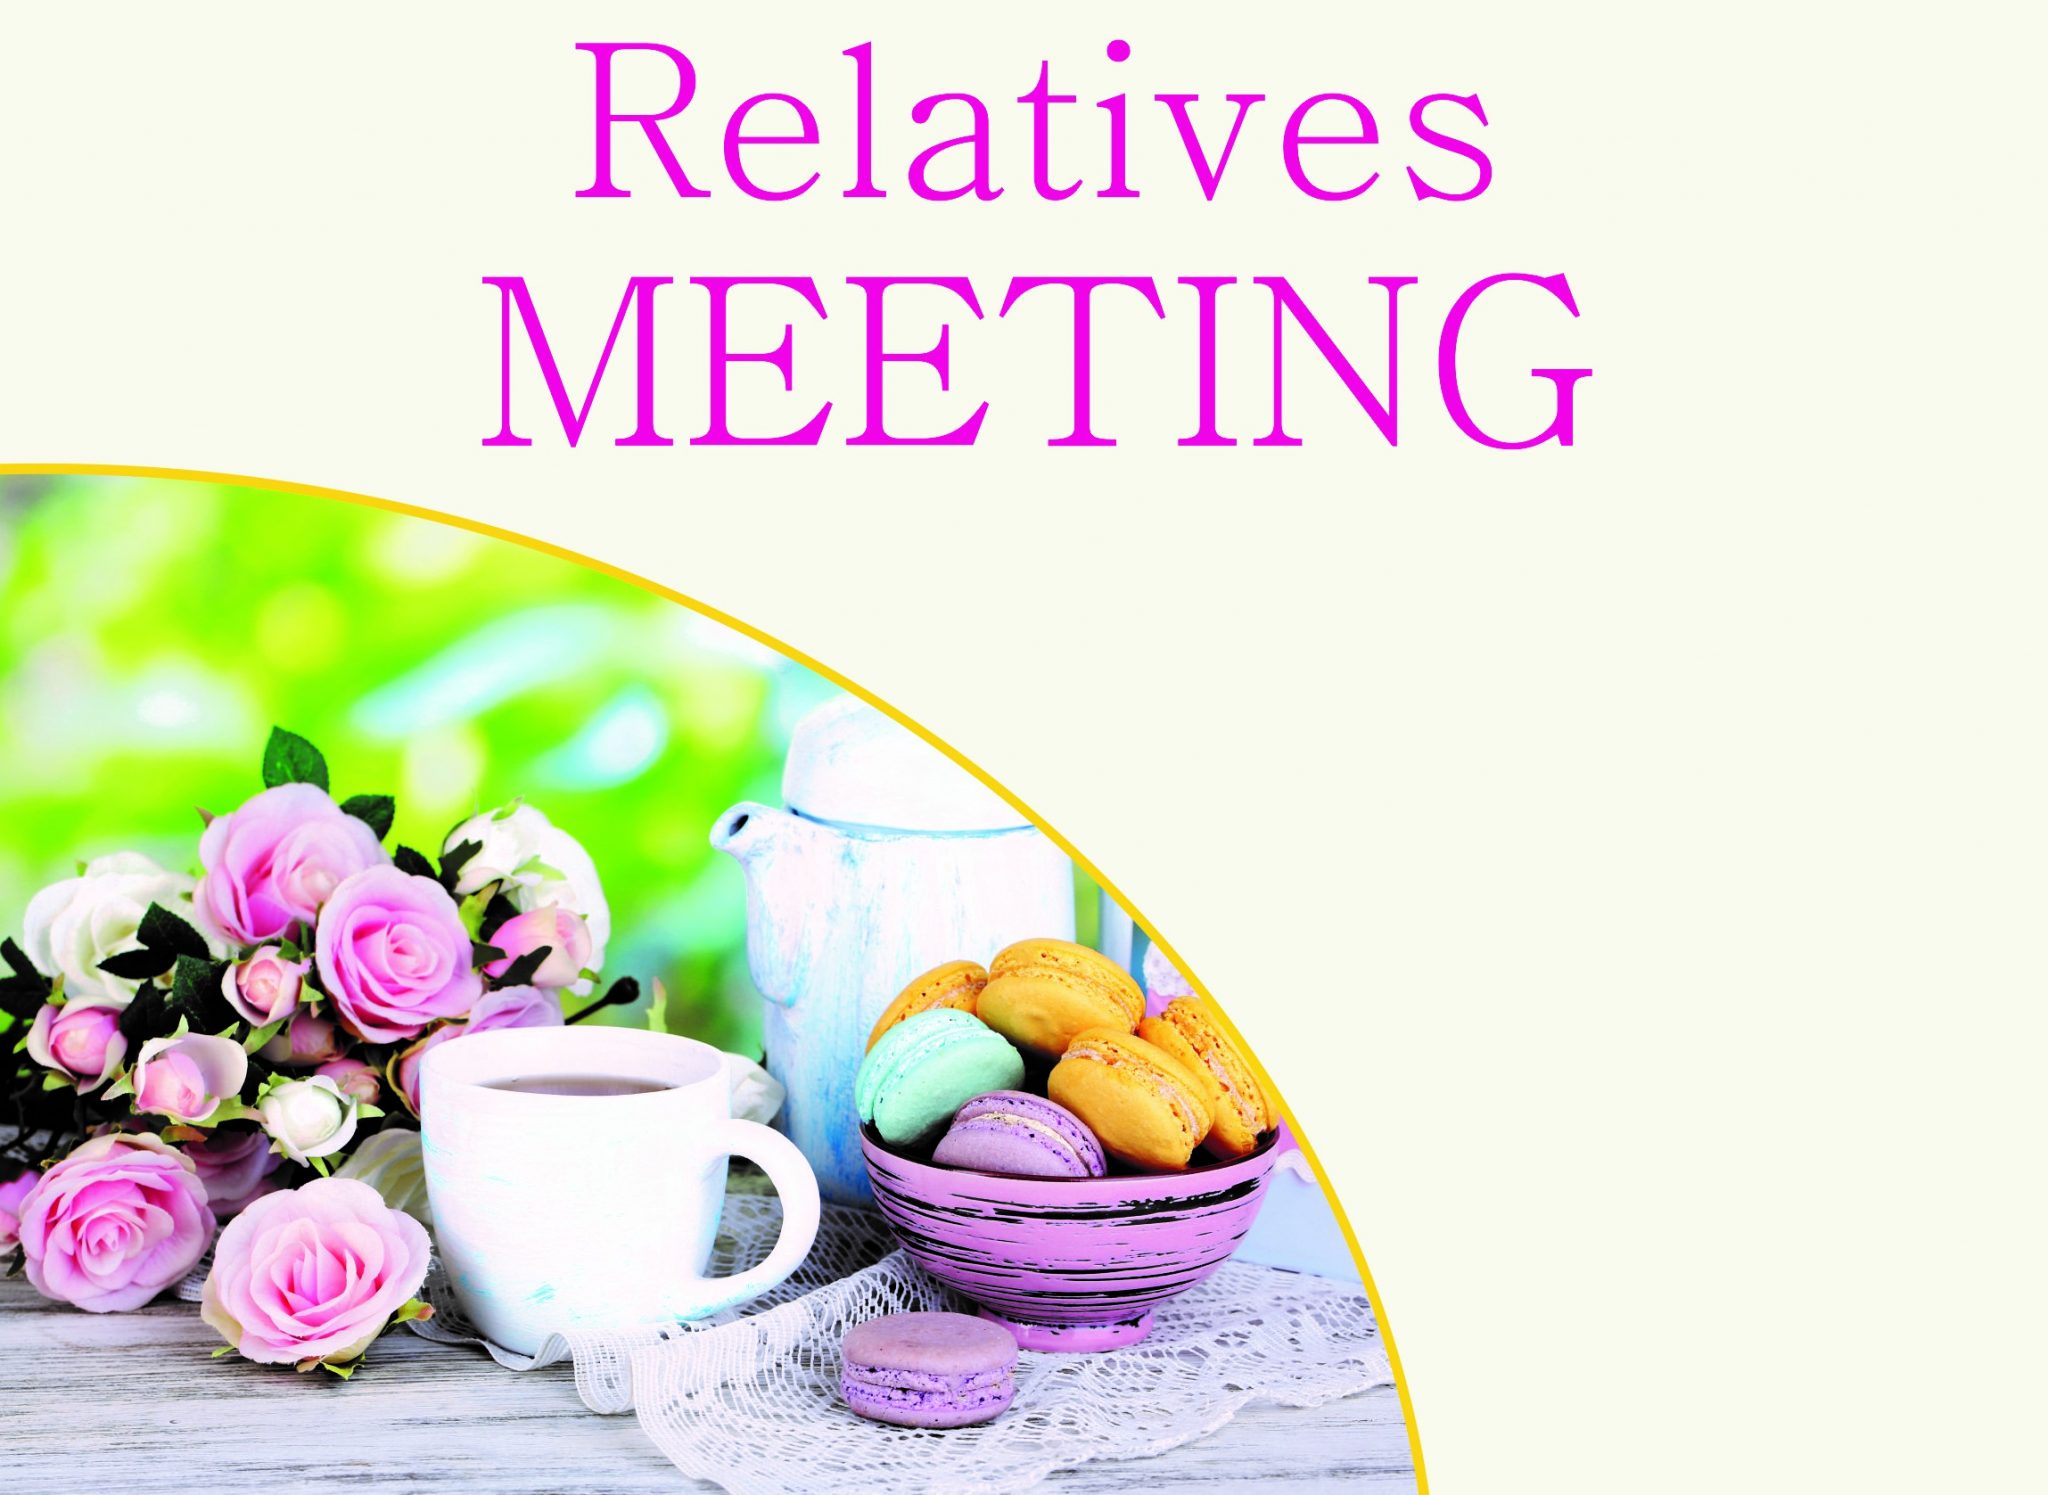 Relatives meeting